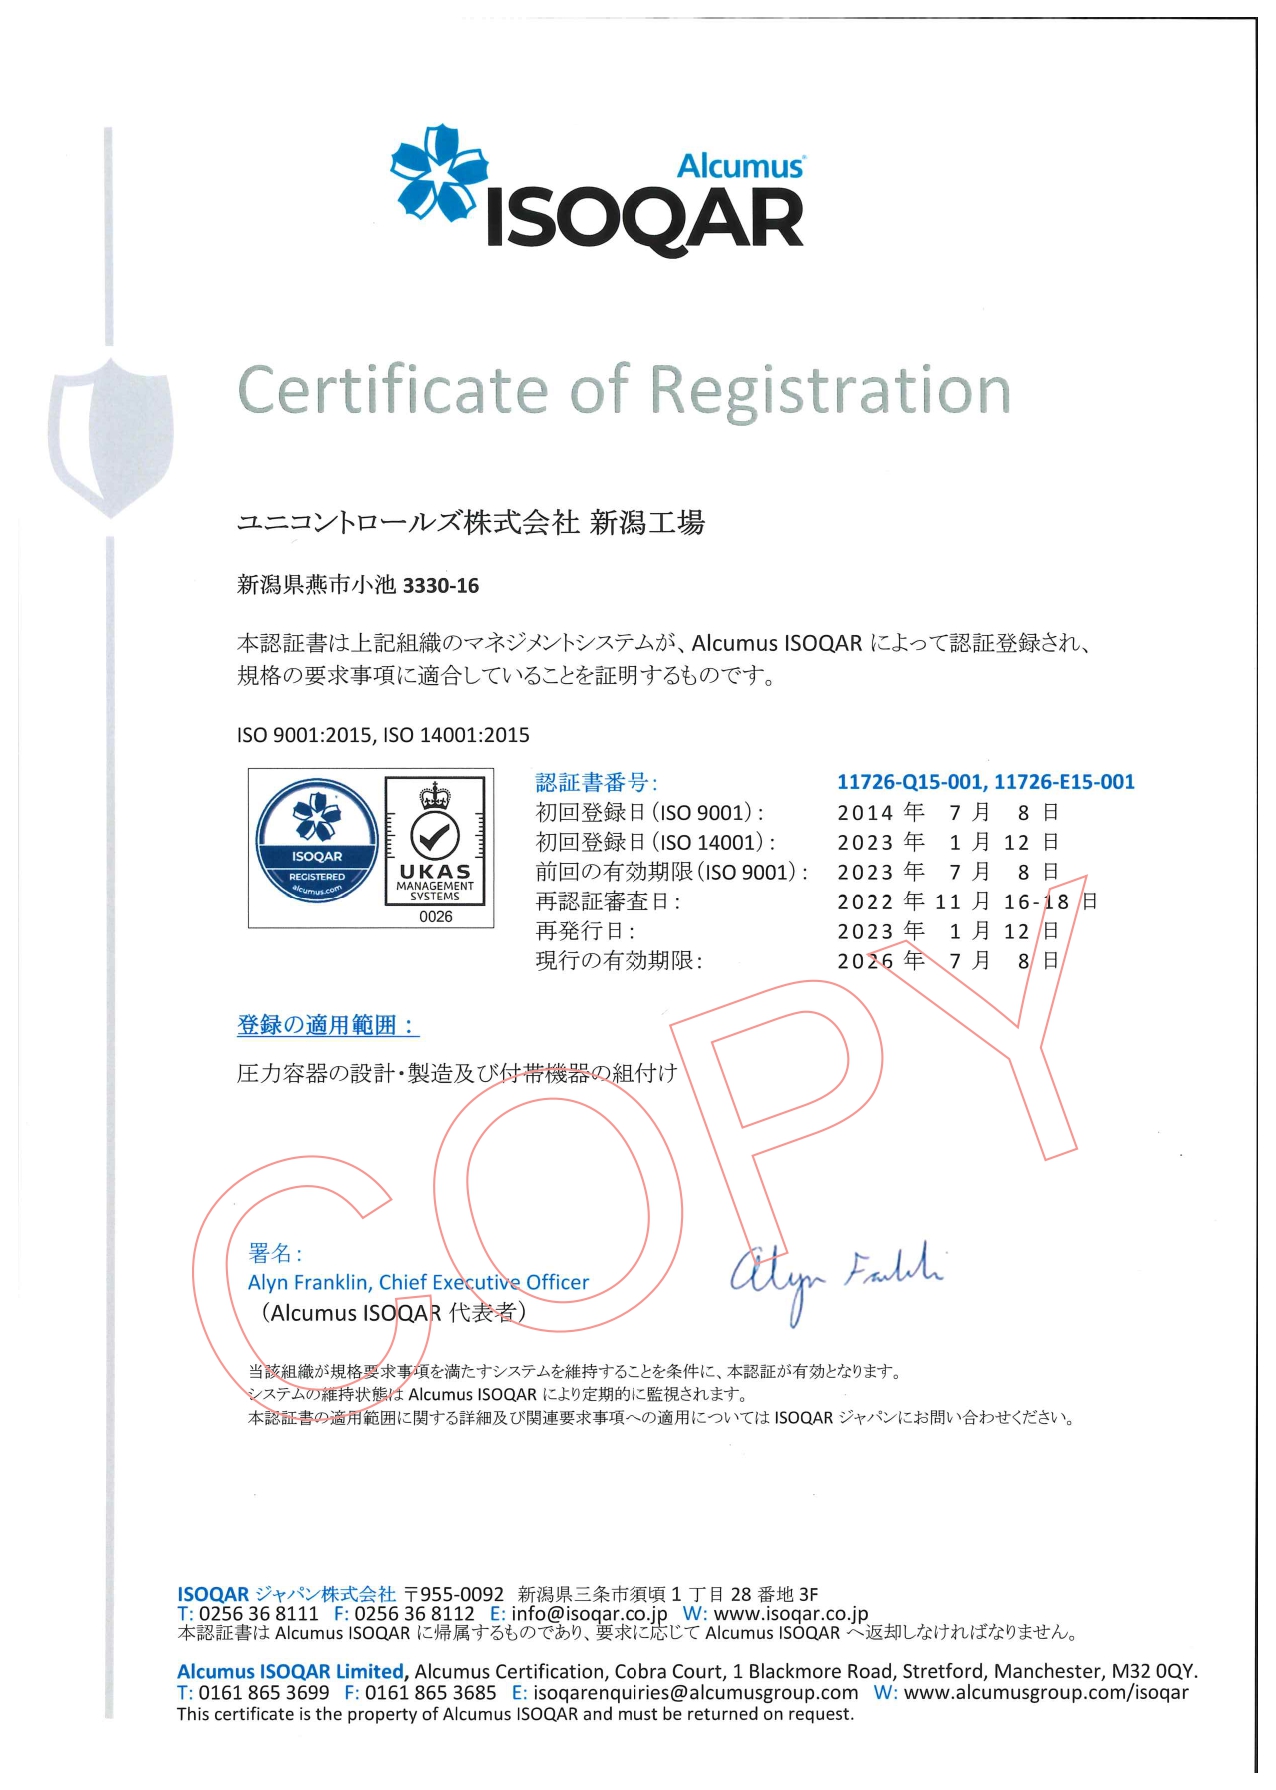 ISO9001 certificate 日本語